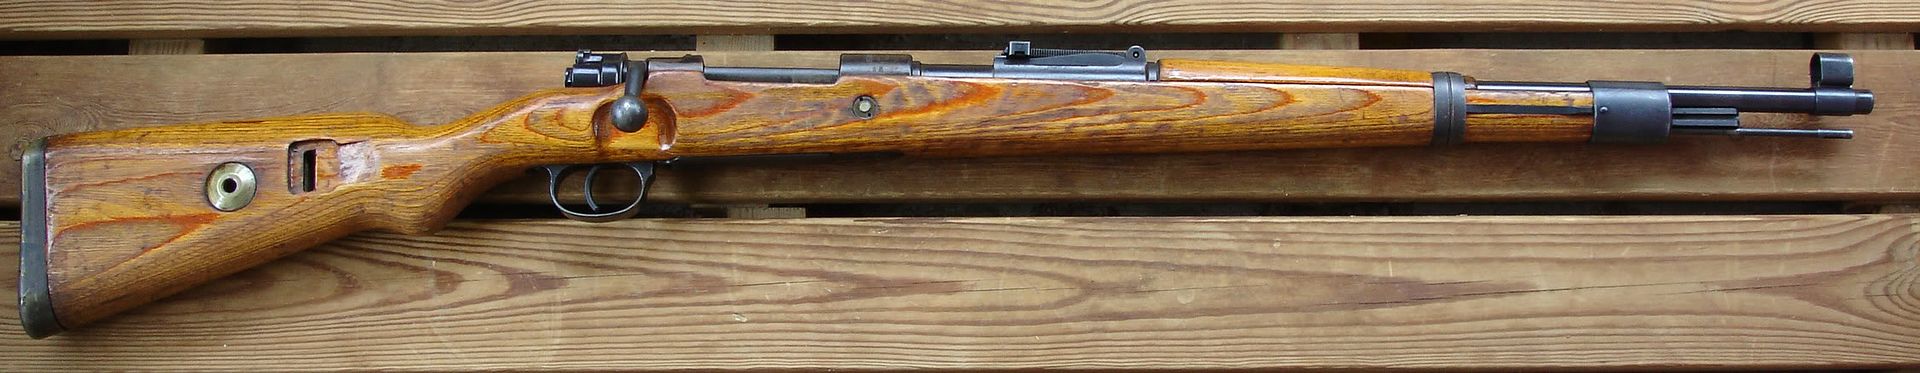 mauser k98 rifle